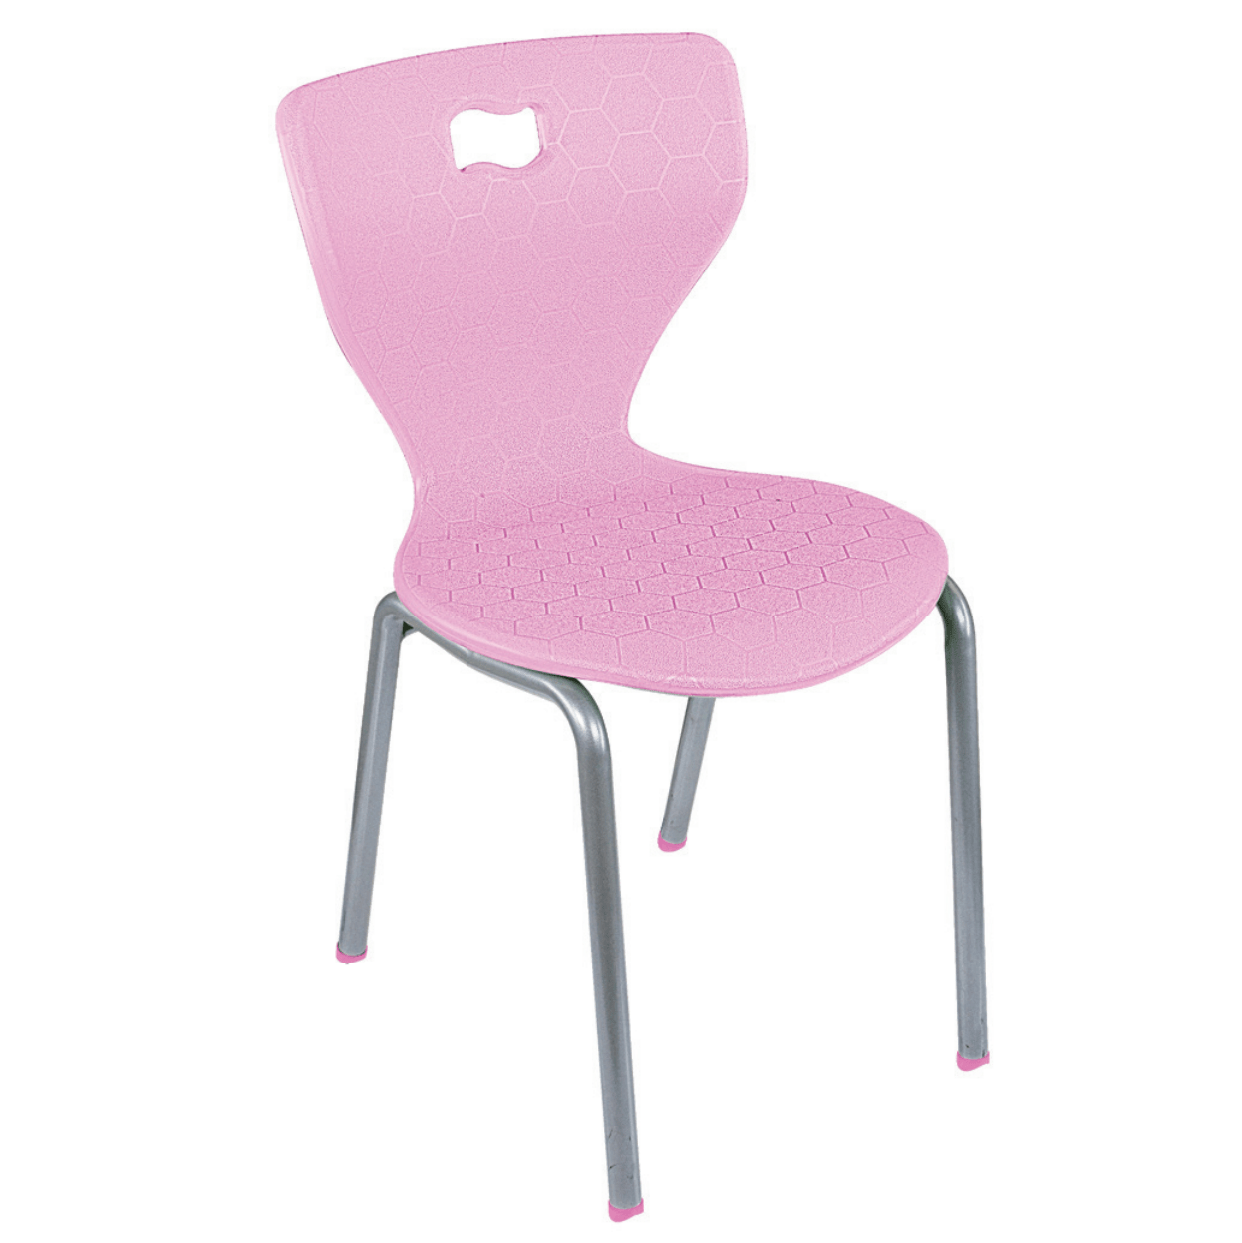 Pink 4 Leg School Chair